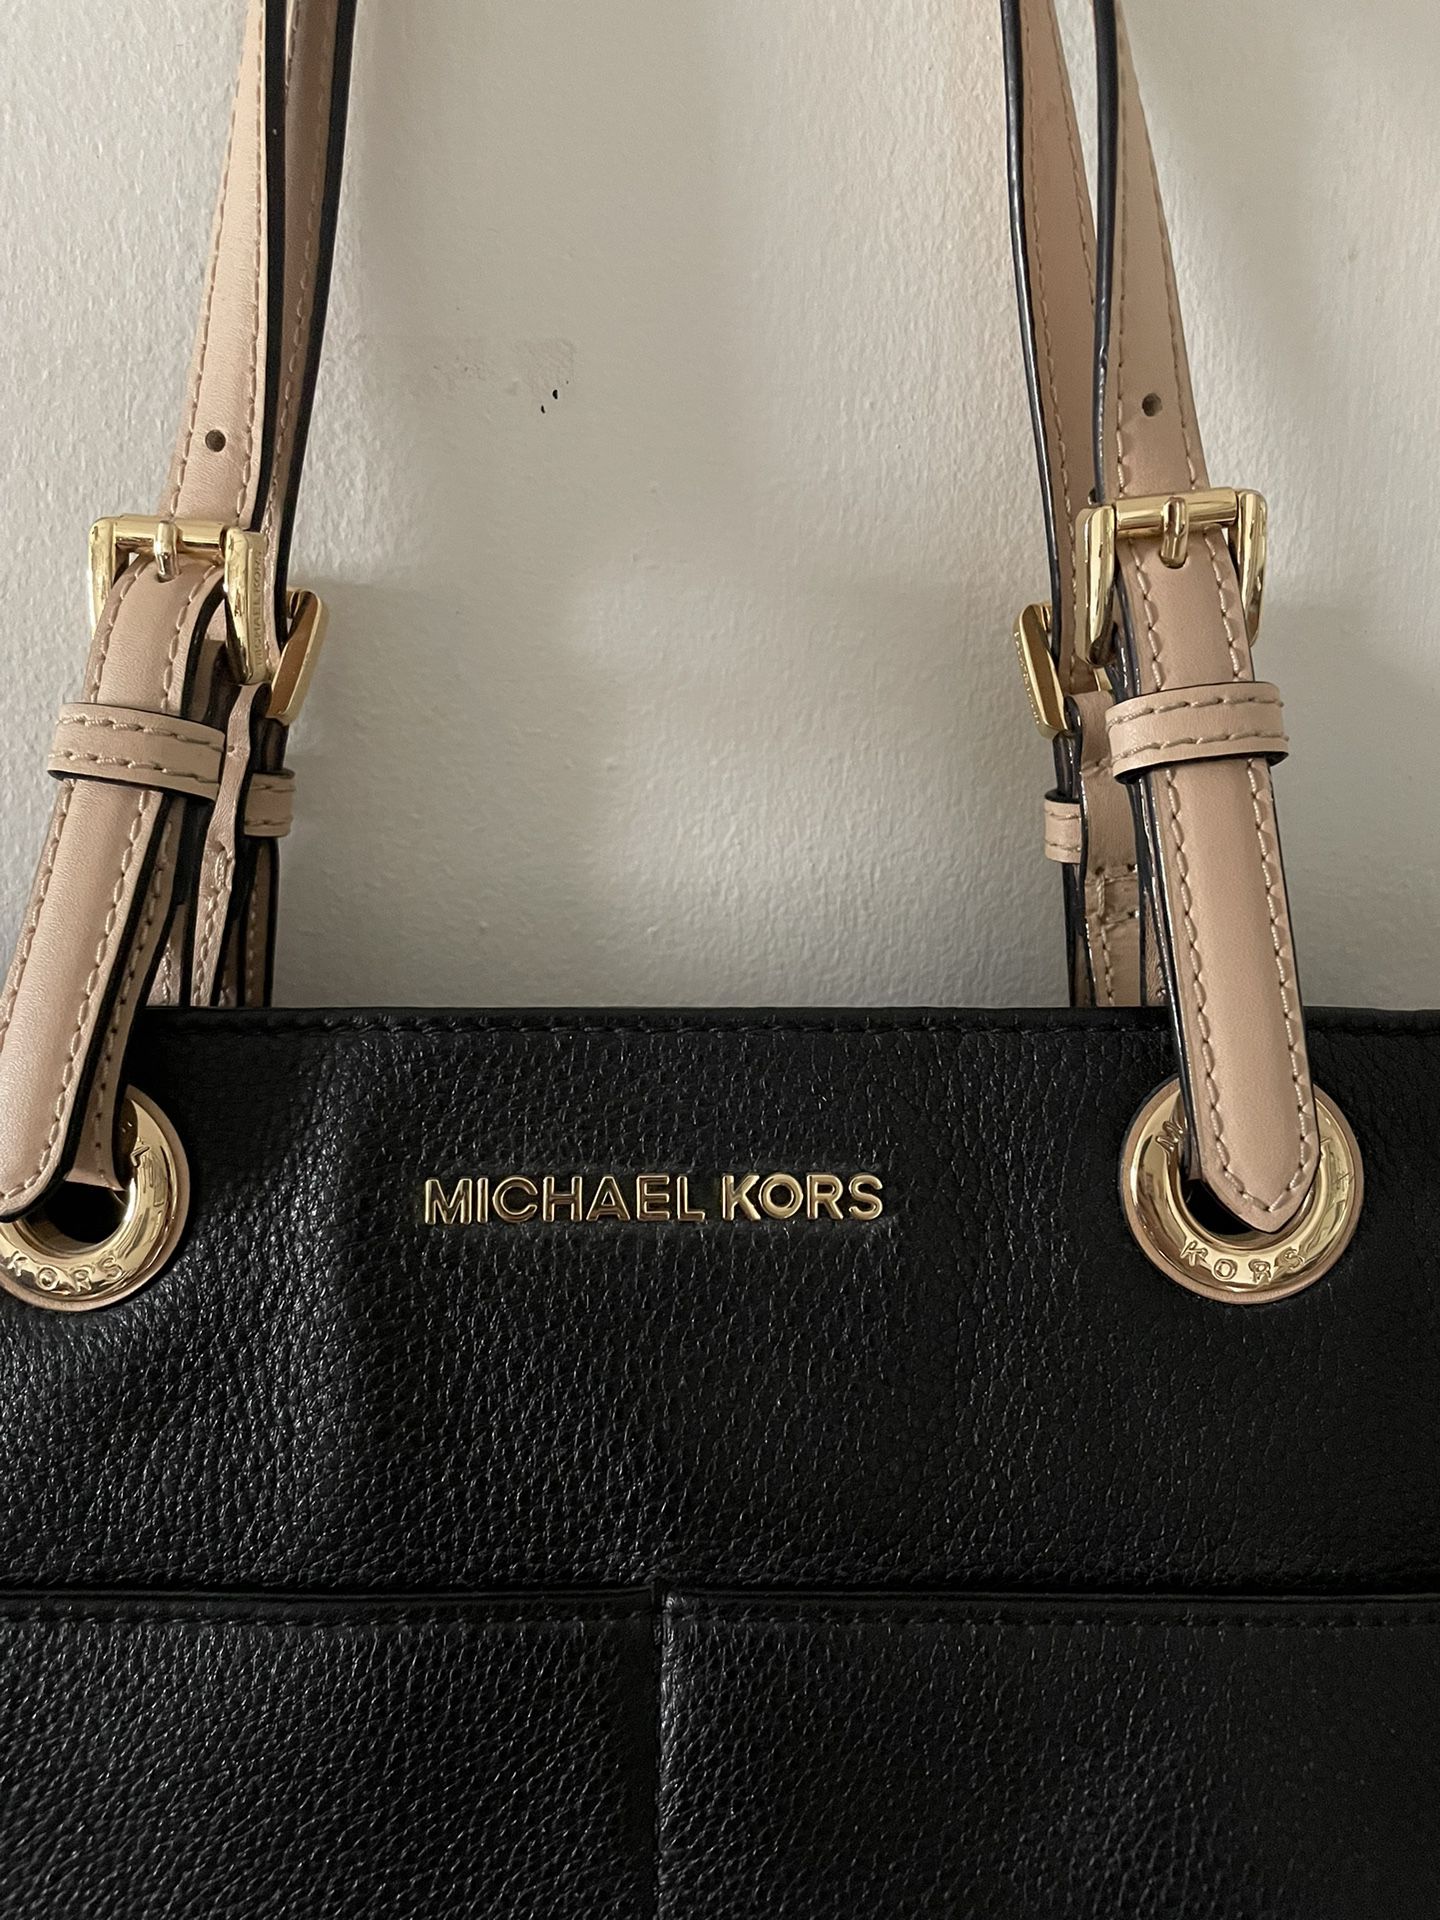 Michael Kors Leather Purse